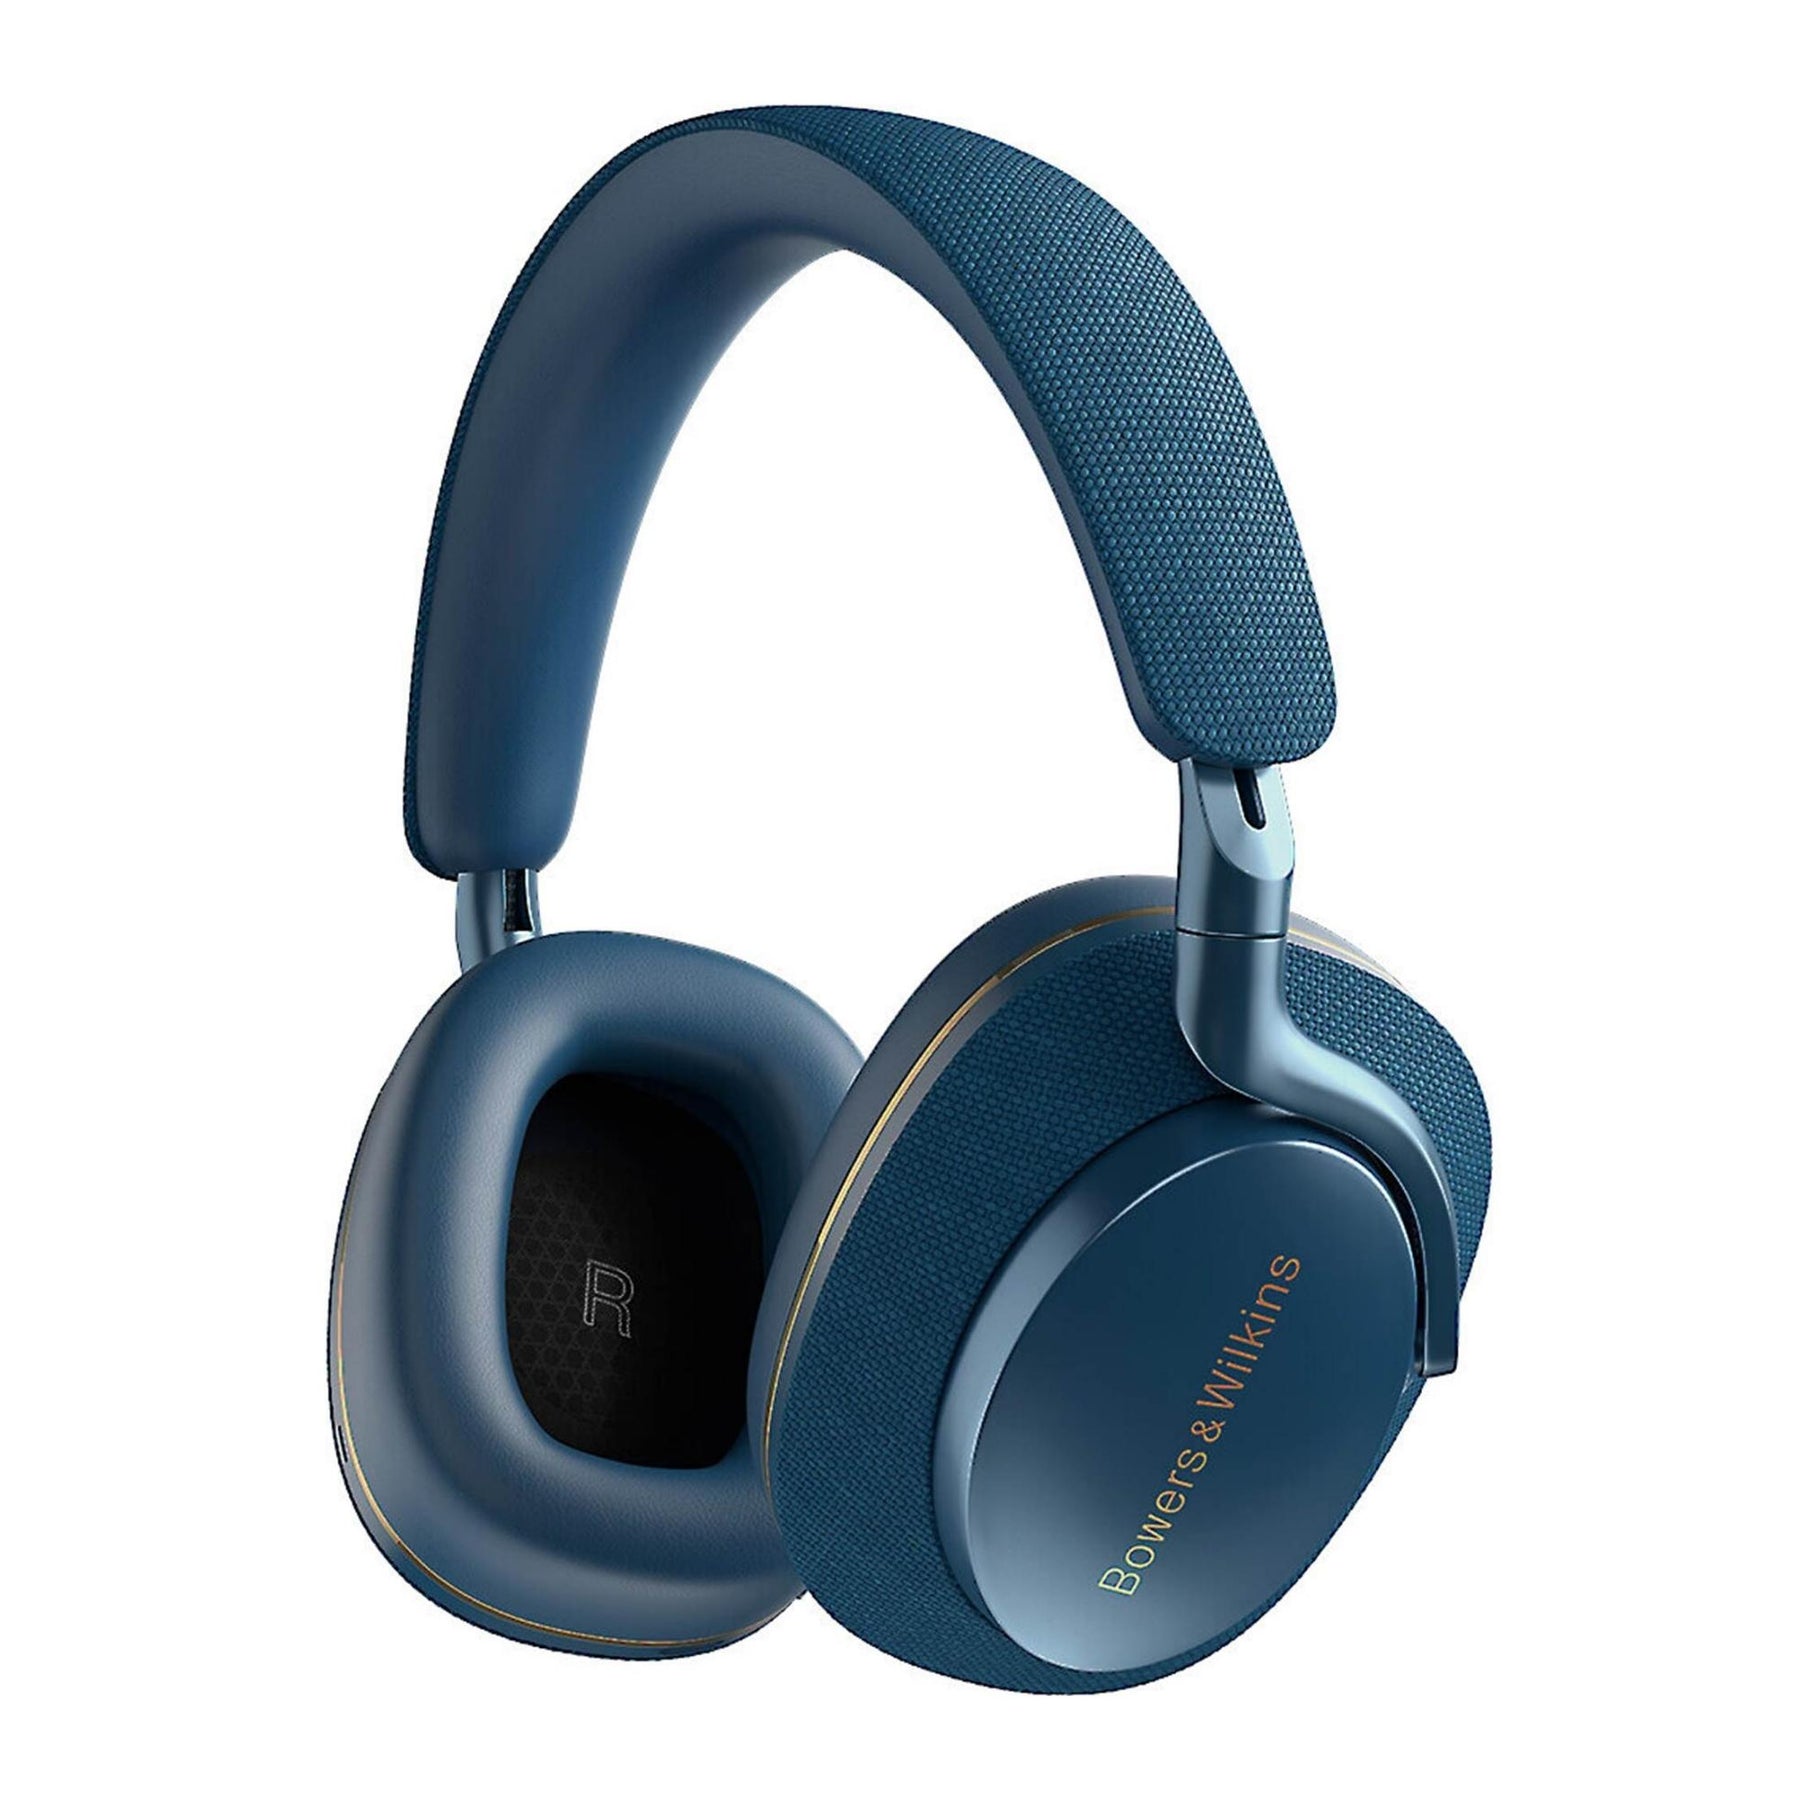 Bowers & Wilkins PX7 S2 - Noise-Canceling Wireless Over-Ear Headphones